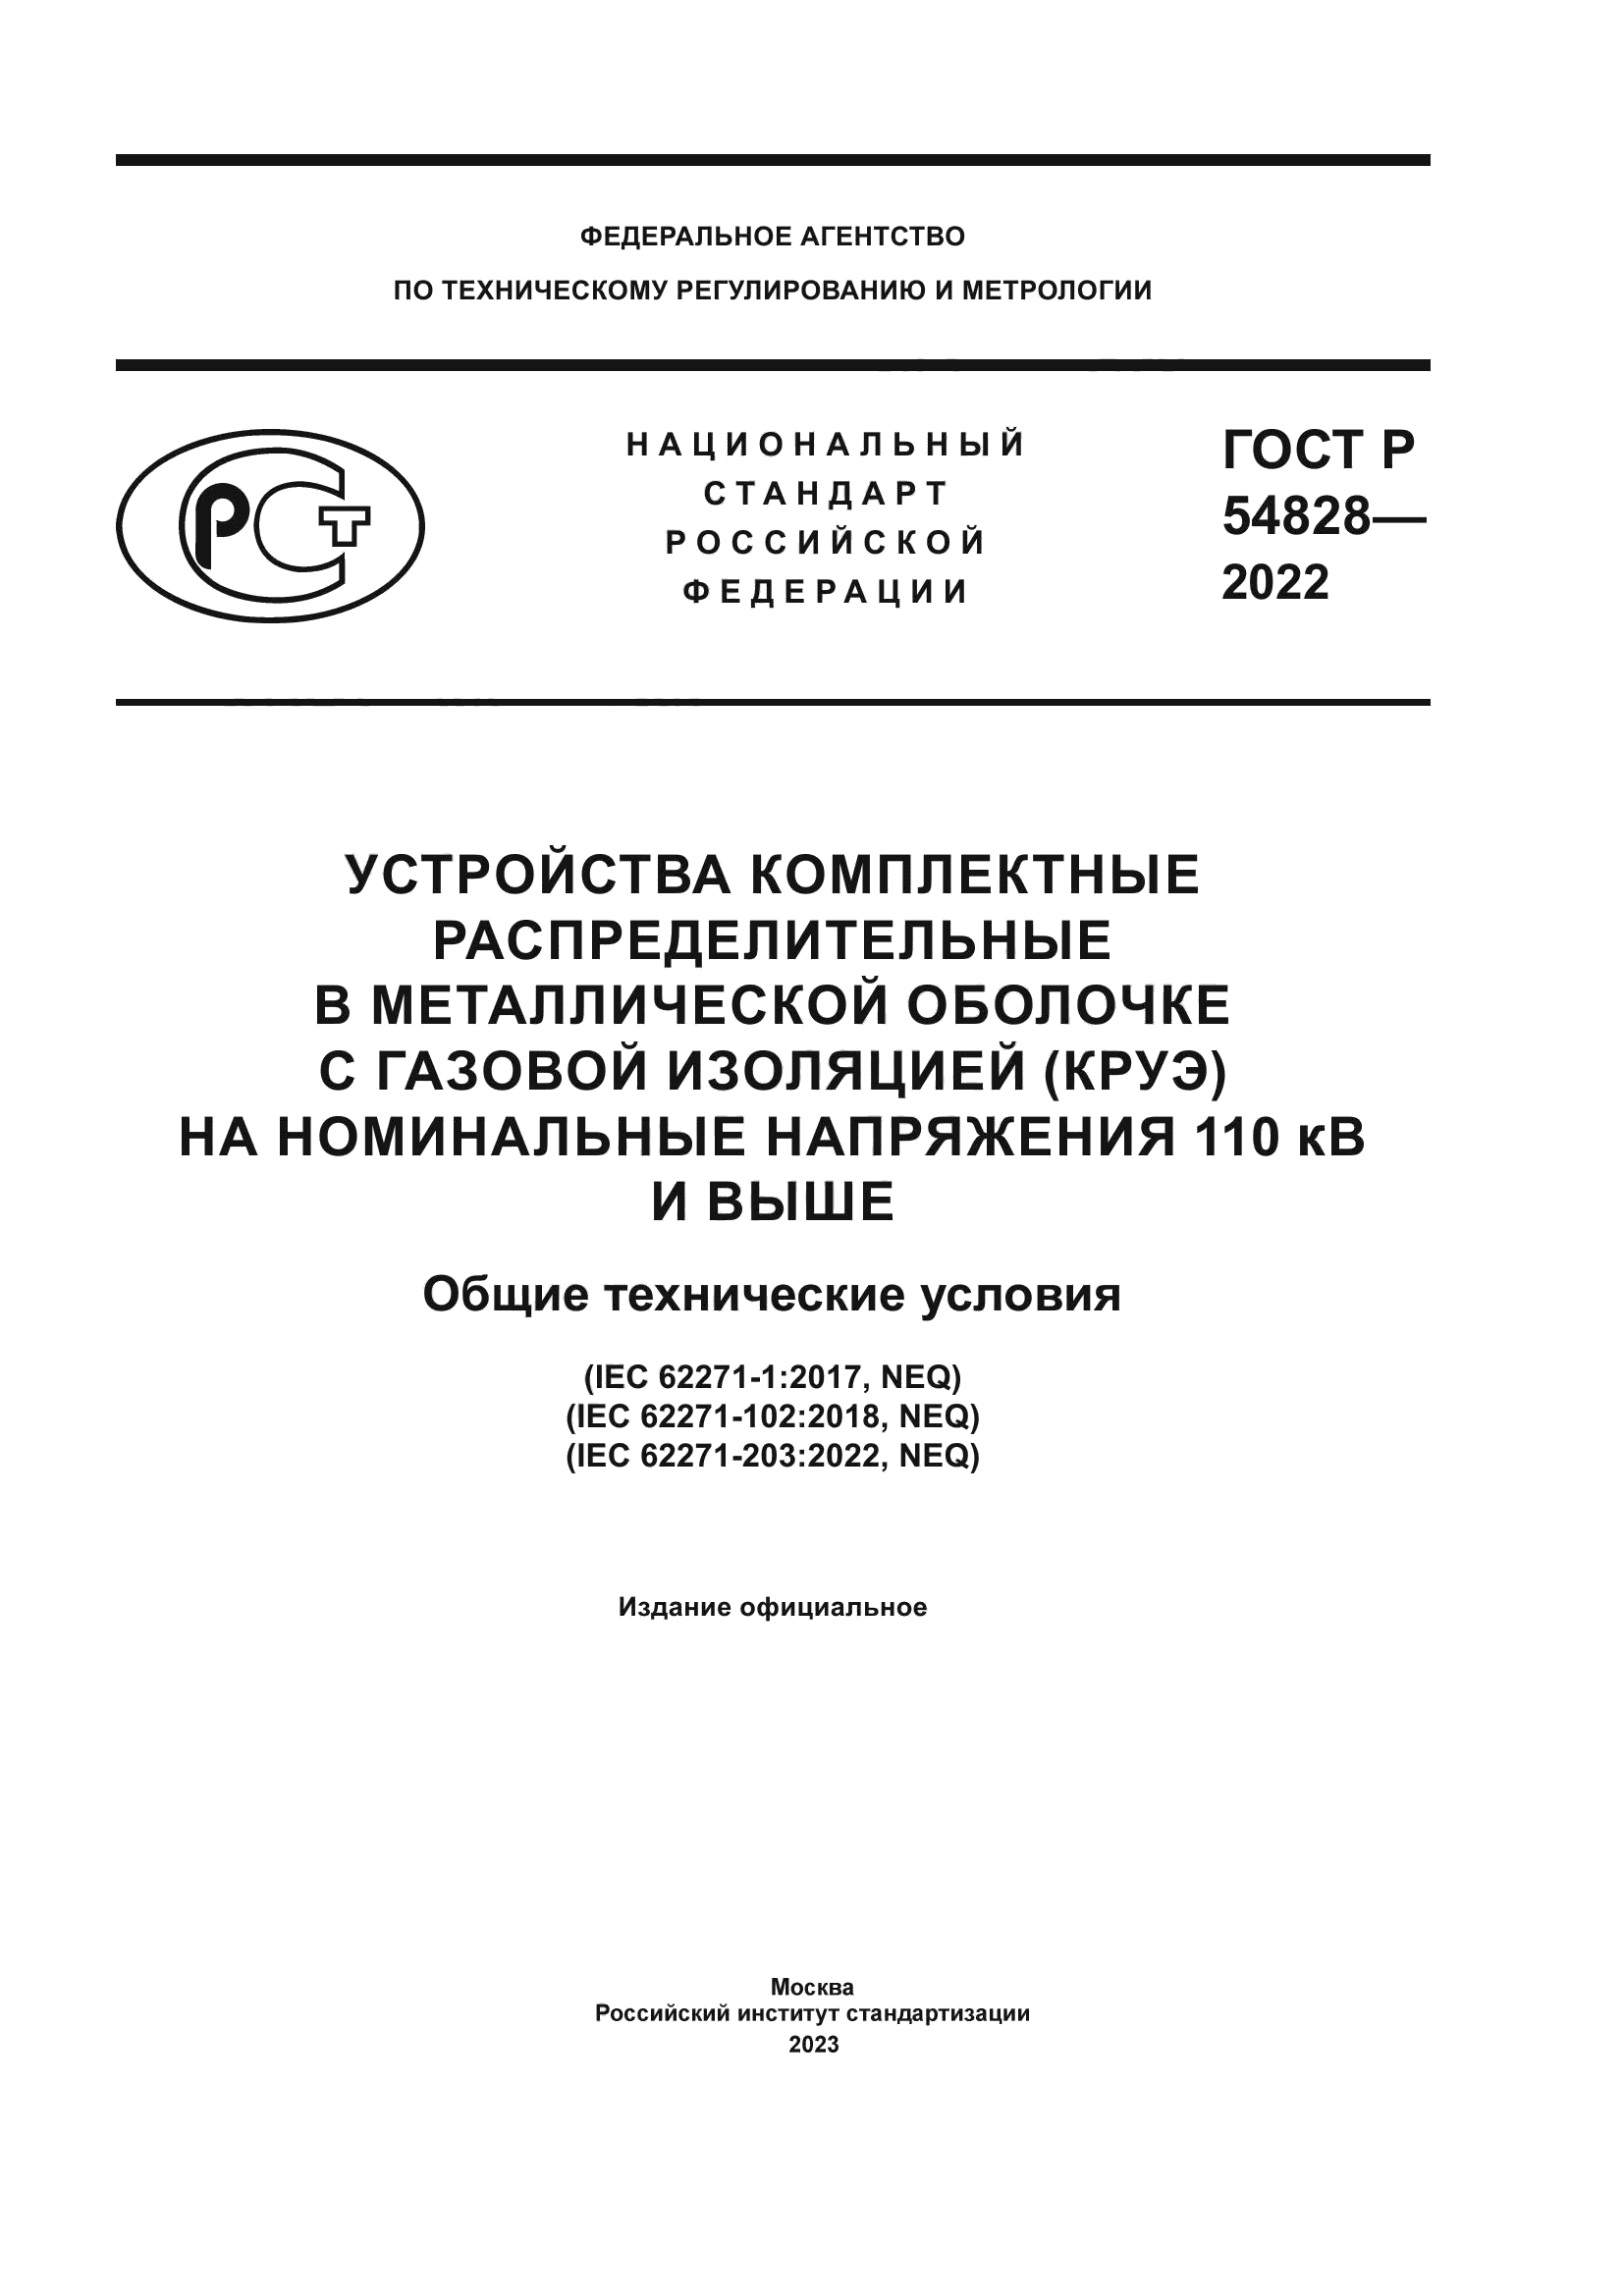 ГОСТ Р 54828-2022